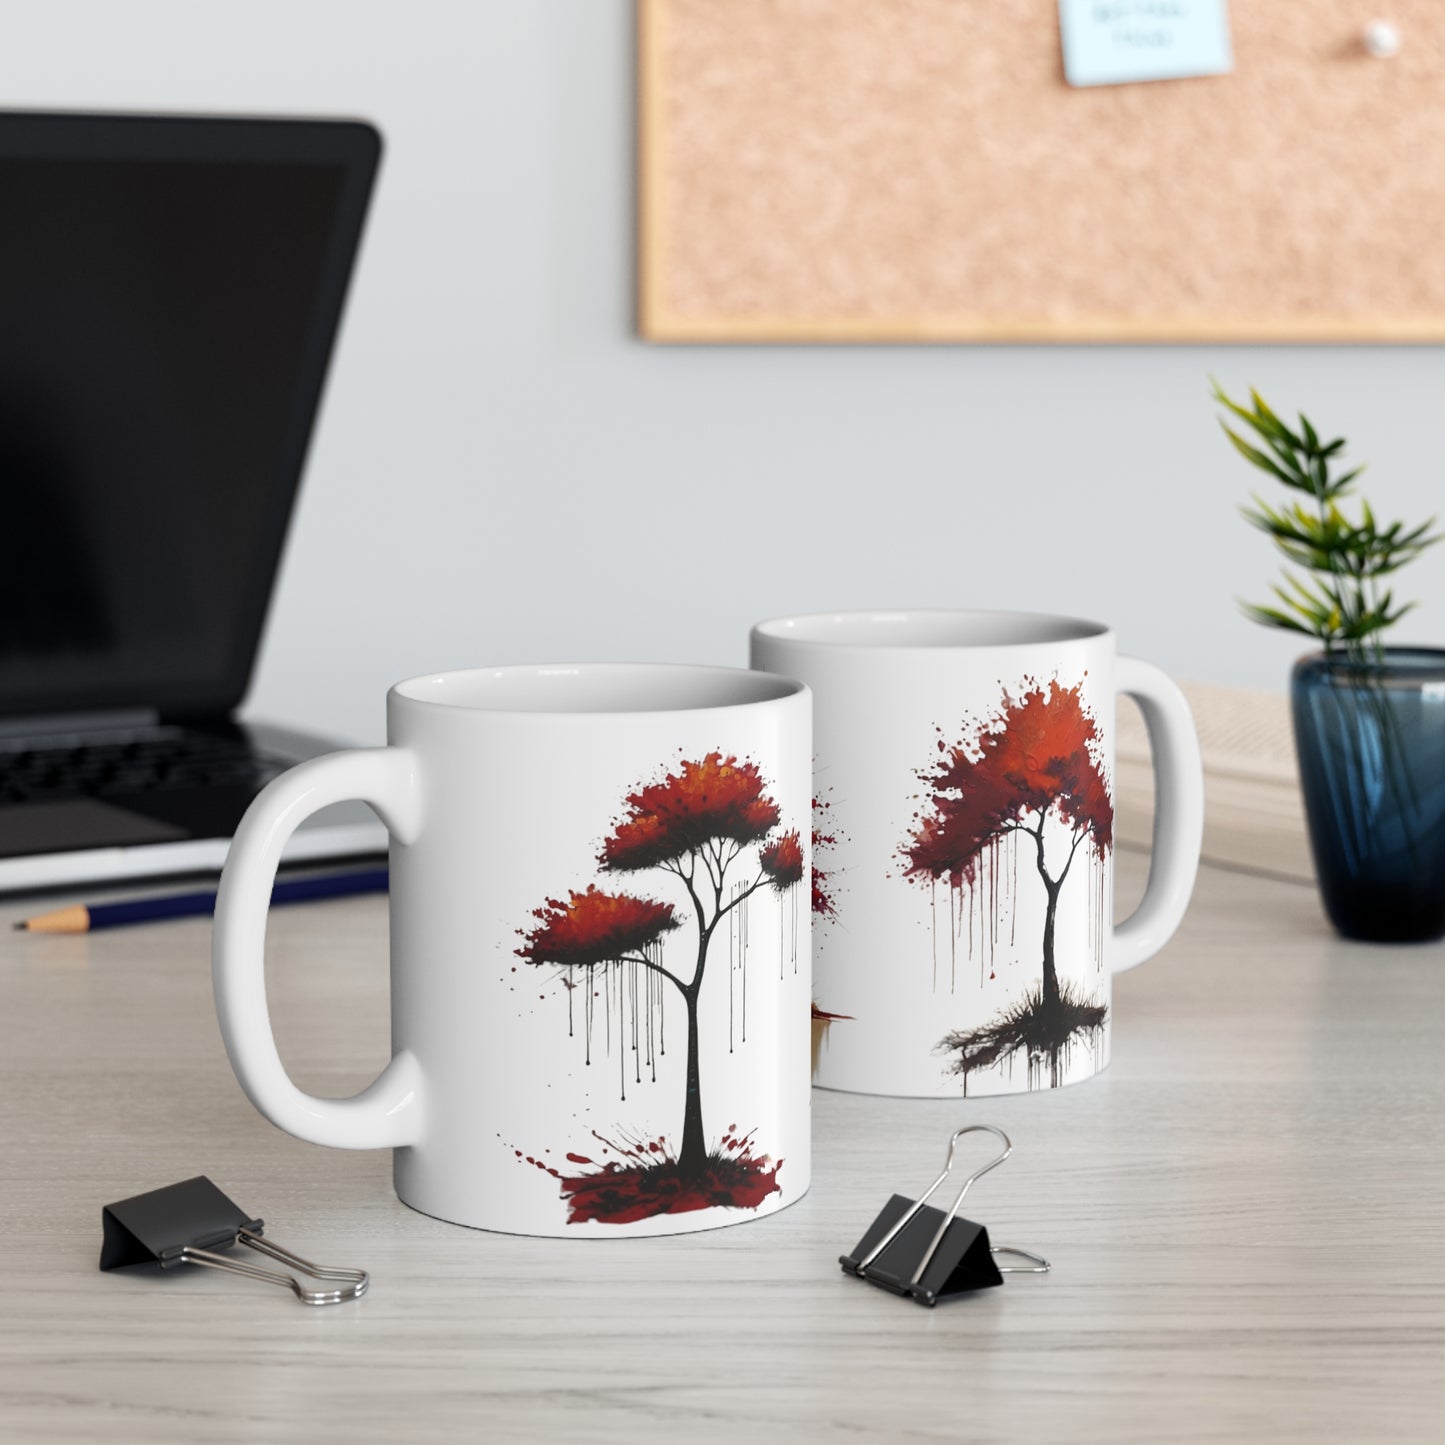 Painted Red Trees Mug - Ceramic Coffee Mug 11oz